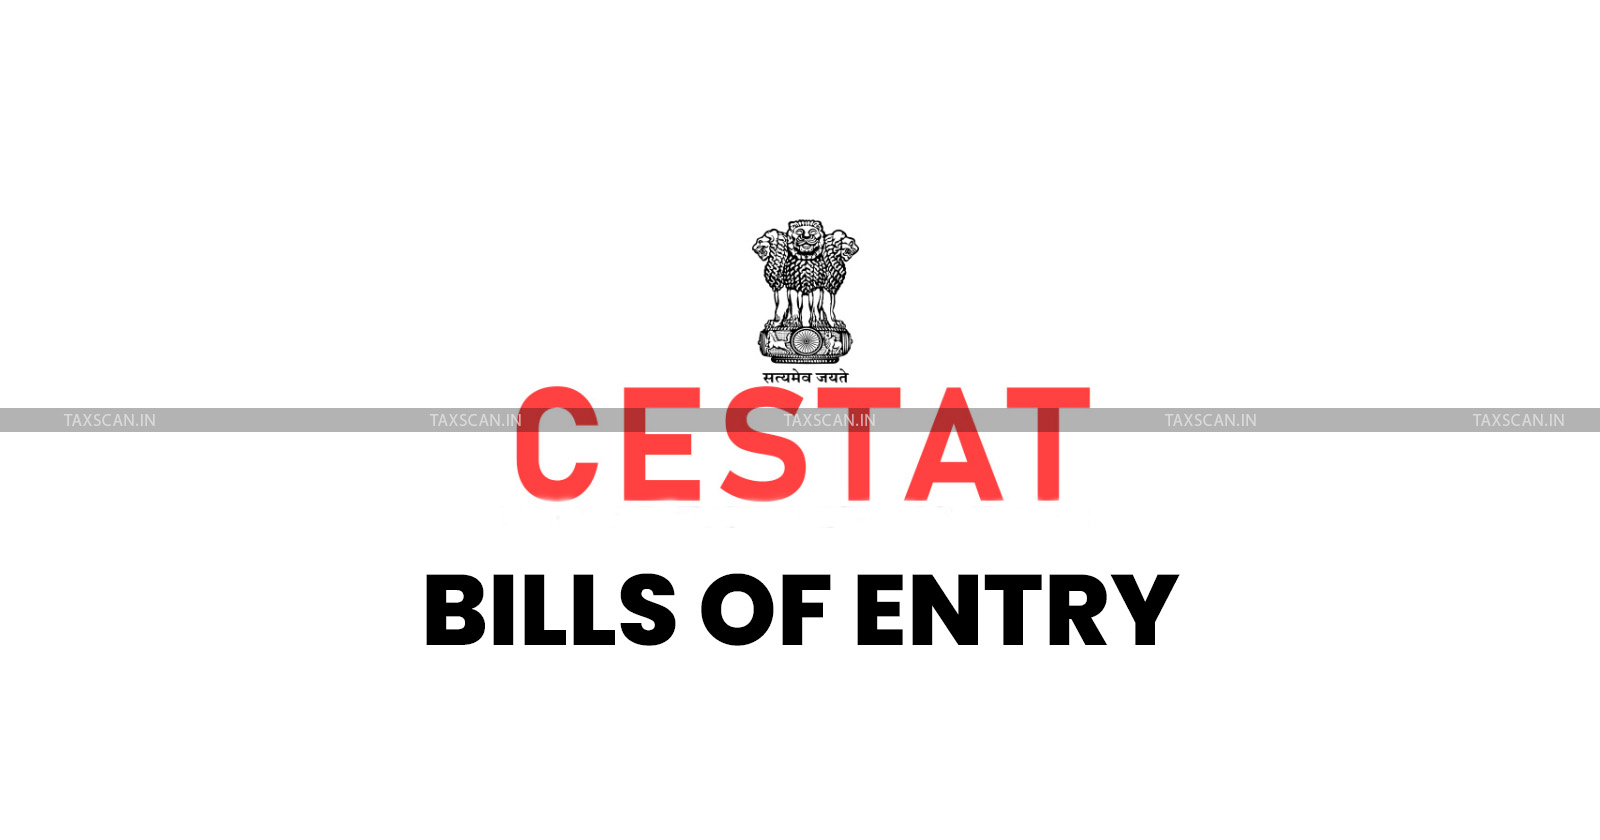 CESTAT - Customs - Appellate - Tribunal - Bills of Entry - TAXSCAN